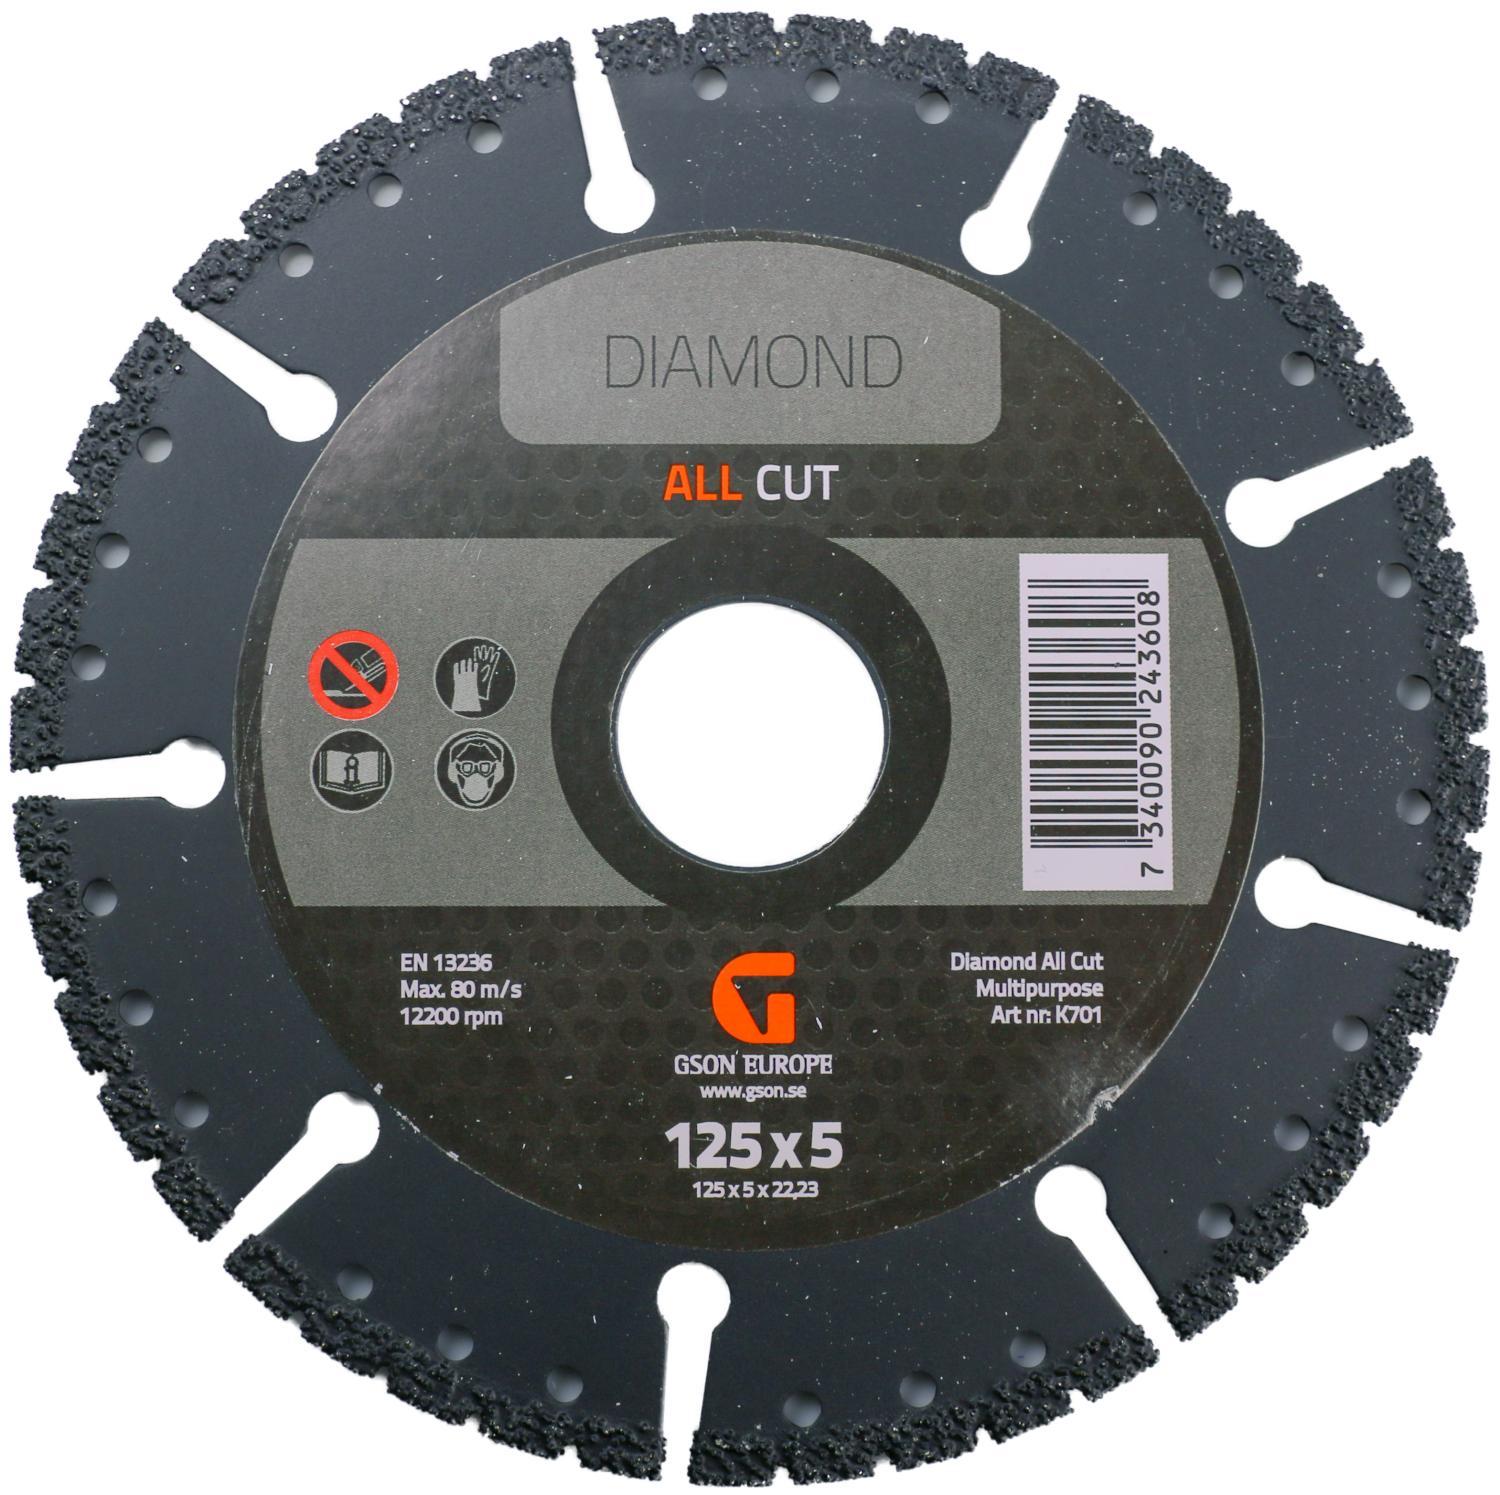 Allcut Diamond Cutting Disc